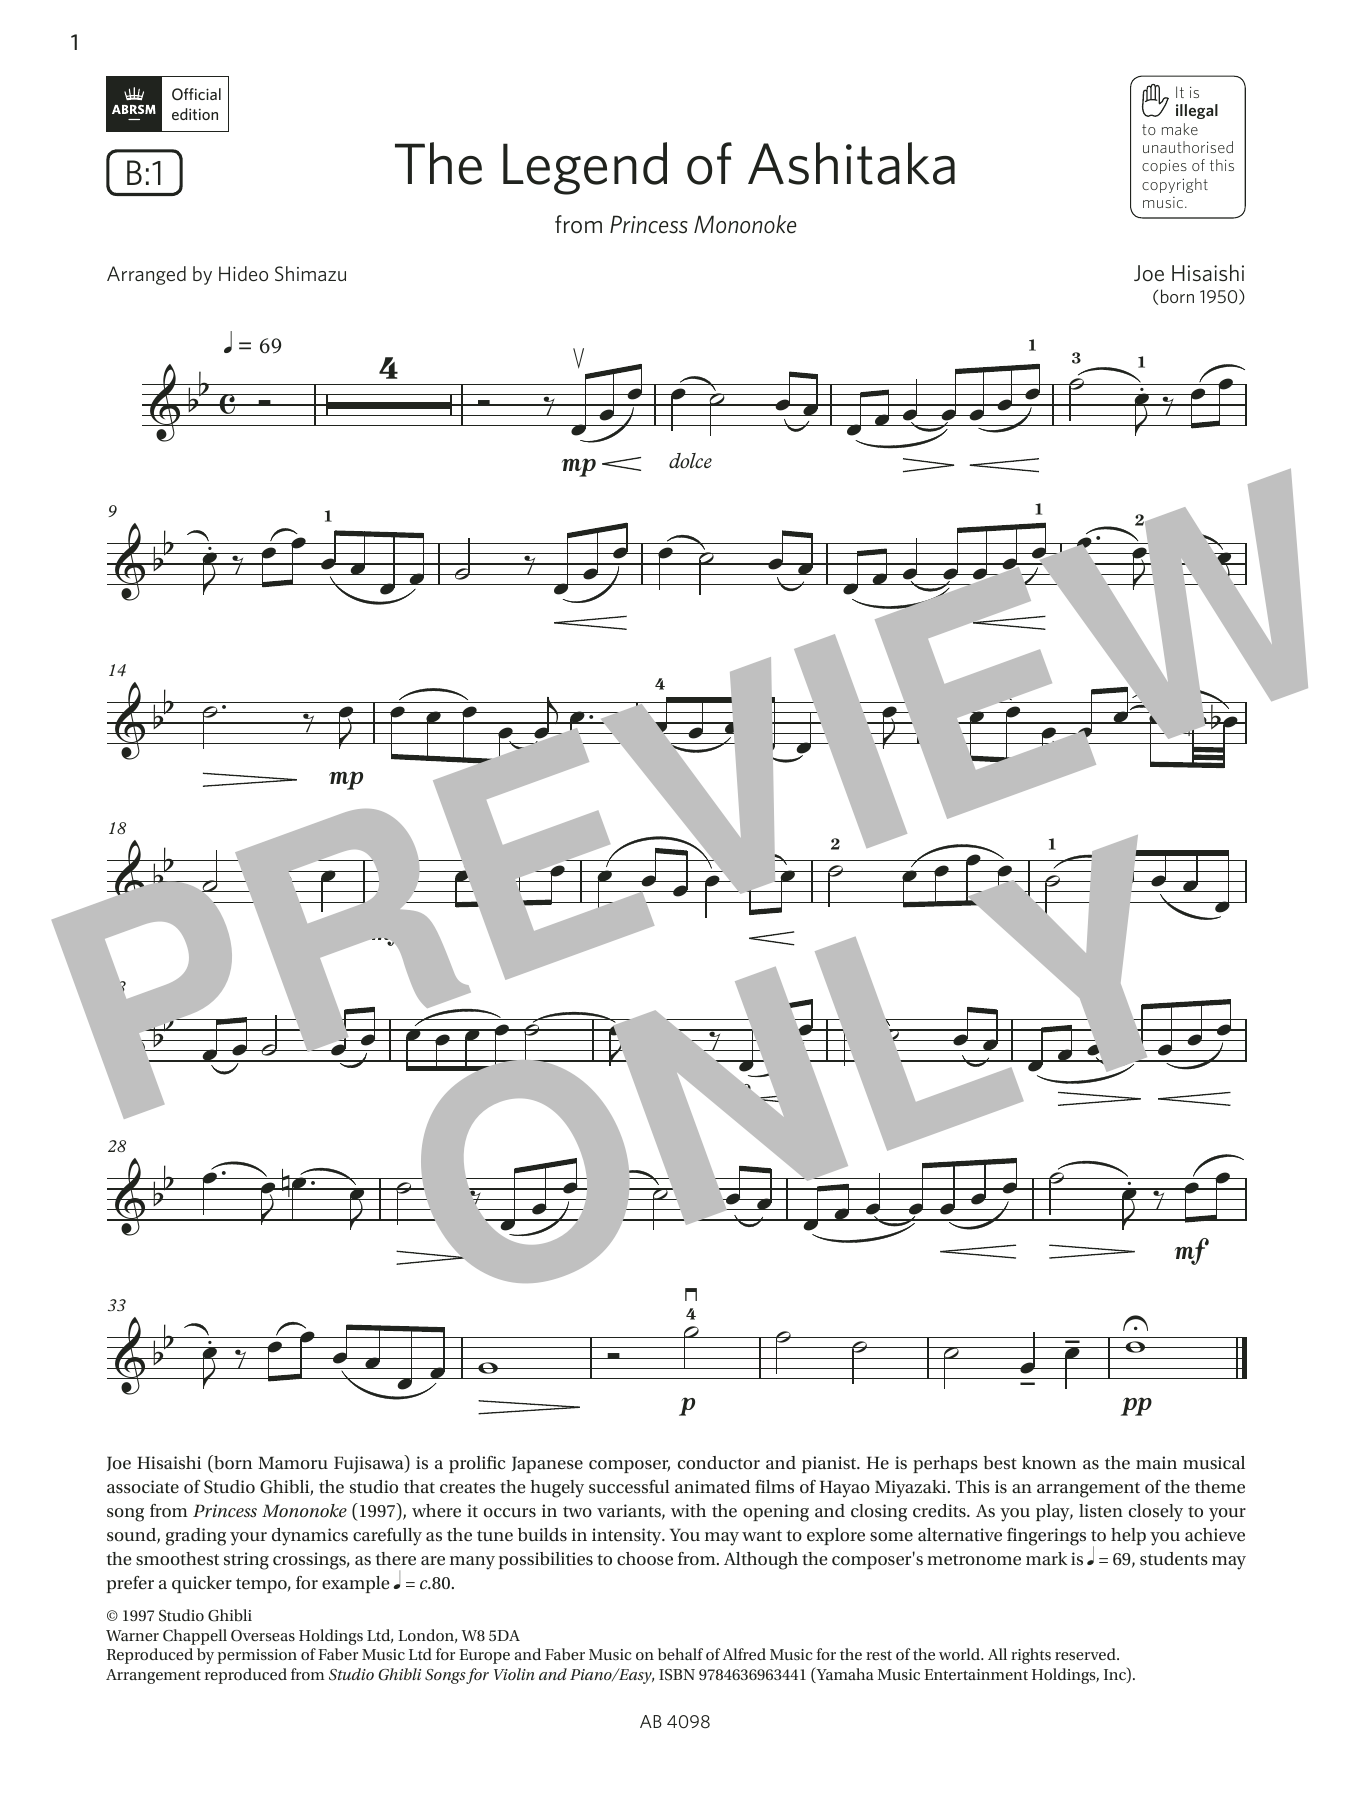 Joe Hisaishi The Legend of Ashitaka (Grade 4, B1, from the ABRSM Violin Syllabus from 2024) Sheet Music Notes & Chords for Violin Solo - Download or Print PDF